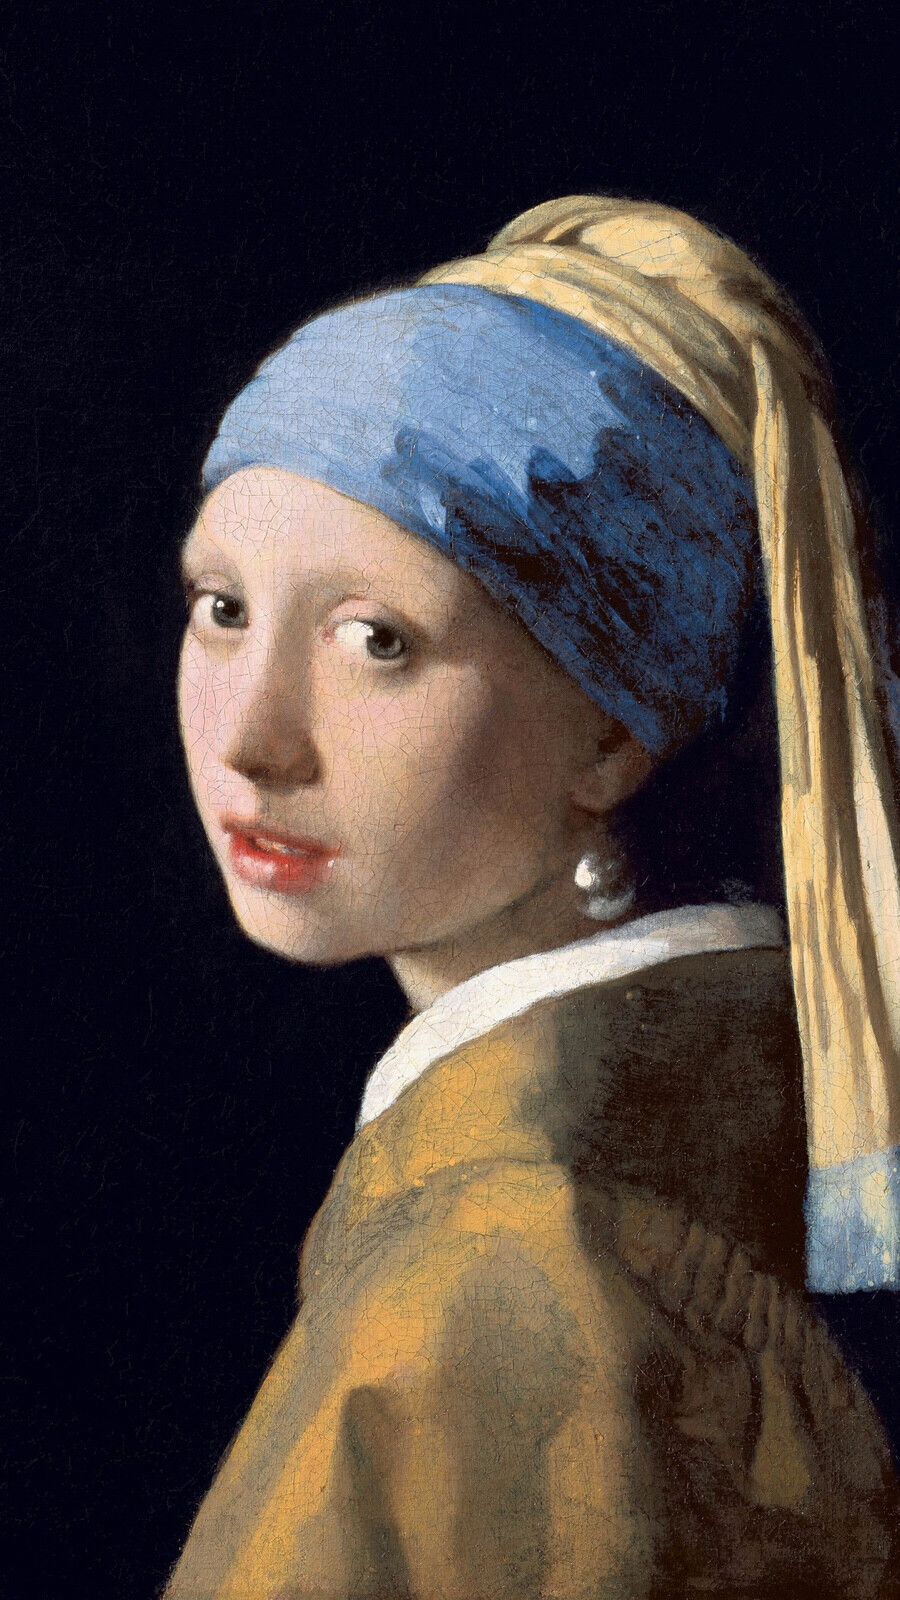 Johanns Vermeer (1632-1675)